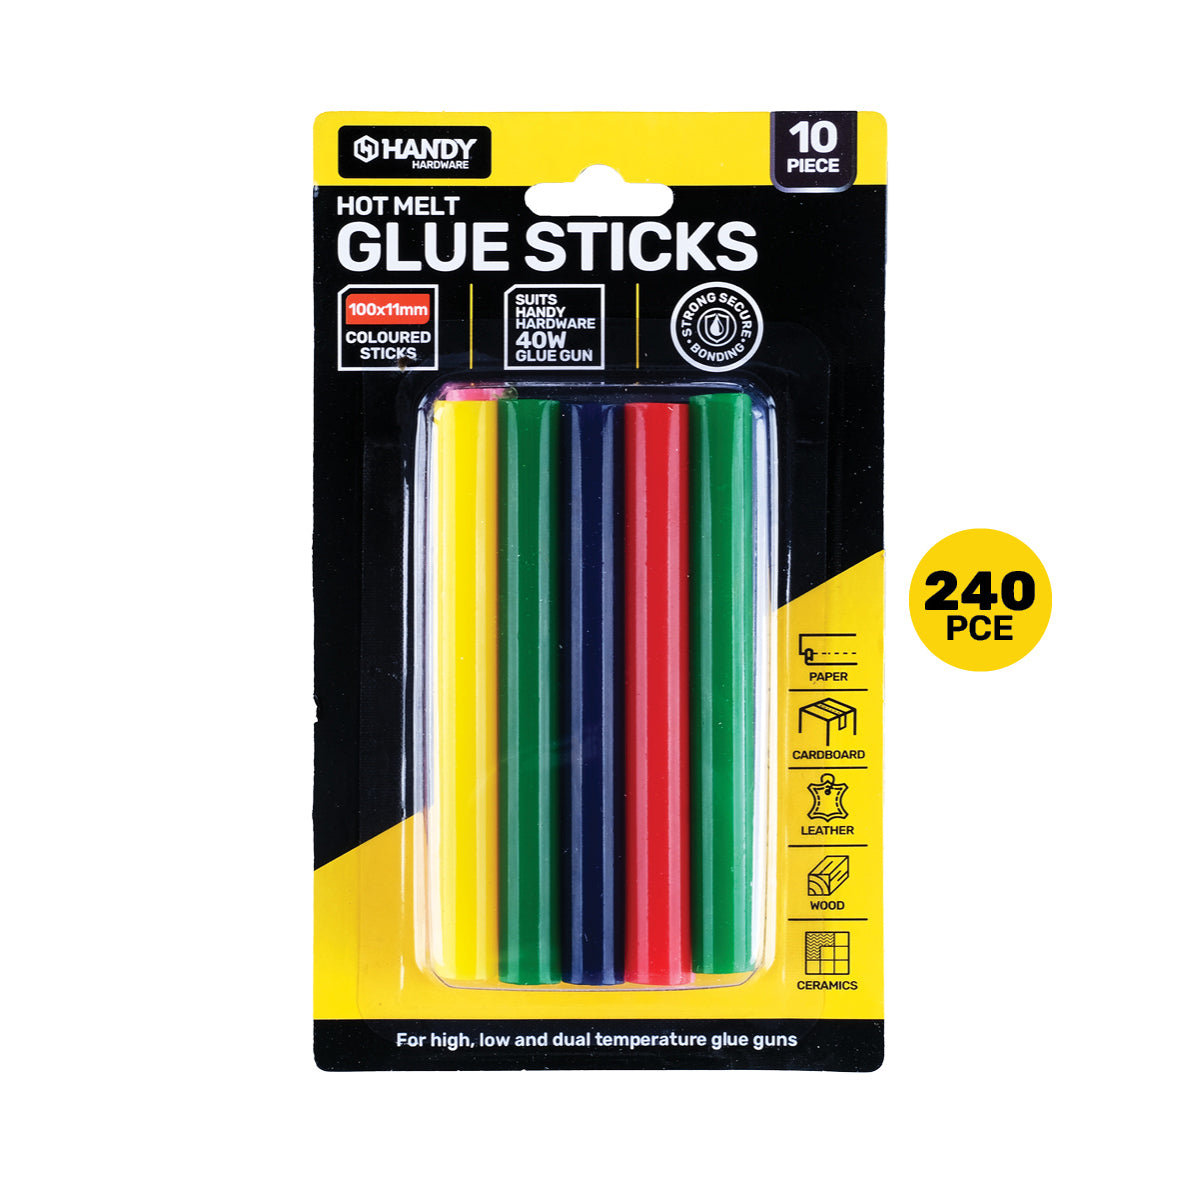 Handy Hardware 240PCE Coloured Hot Melt Glue Stick Vibrant Colours 100 x 11mm